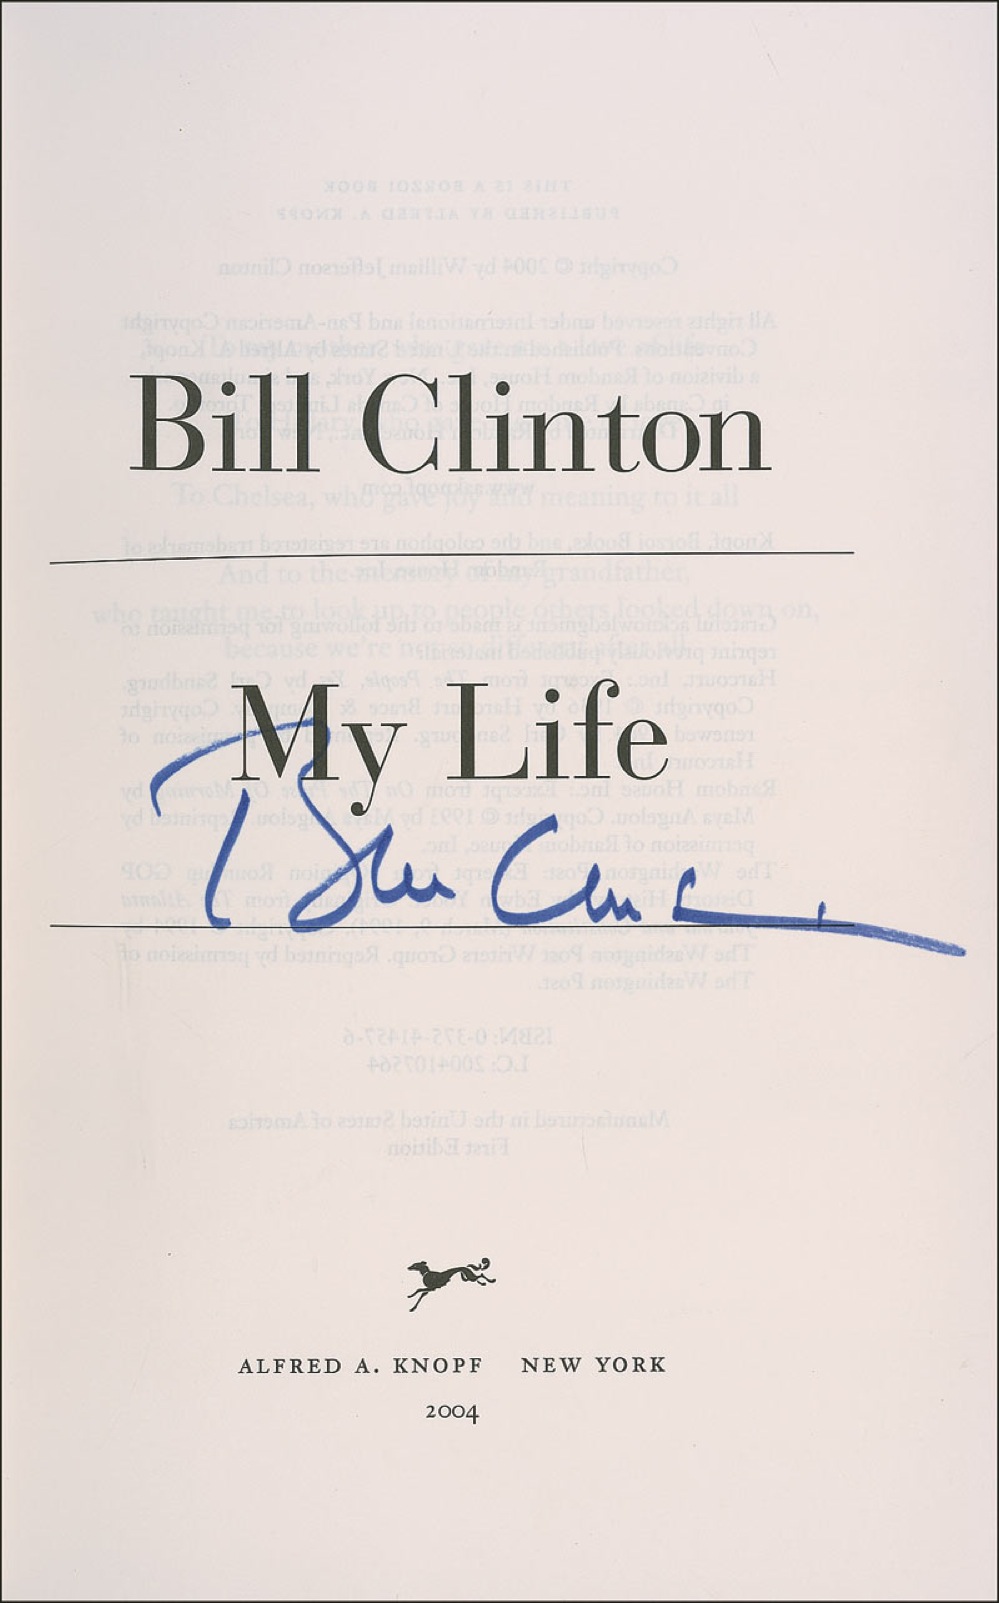 Lot #37 Bill Clinton